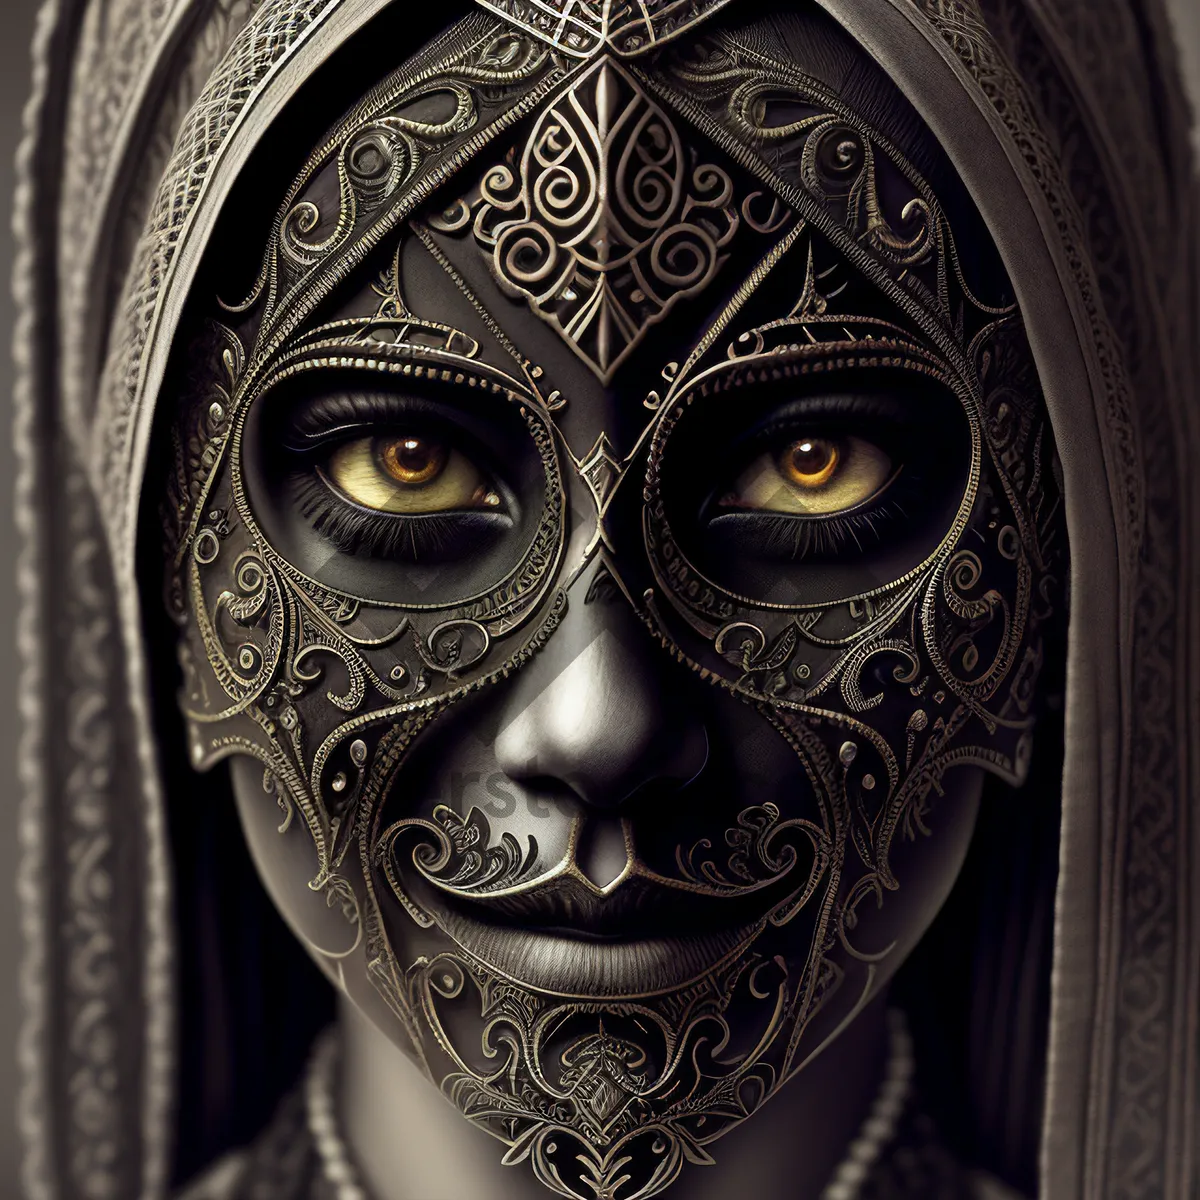 Picture of Venetian Carnival Mask - Artistic Cultural Sculpture